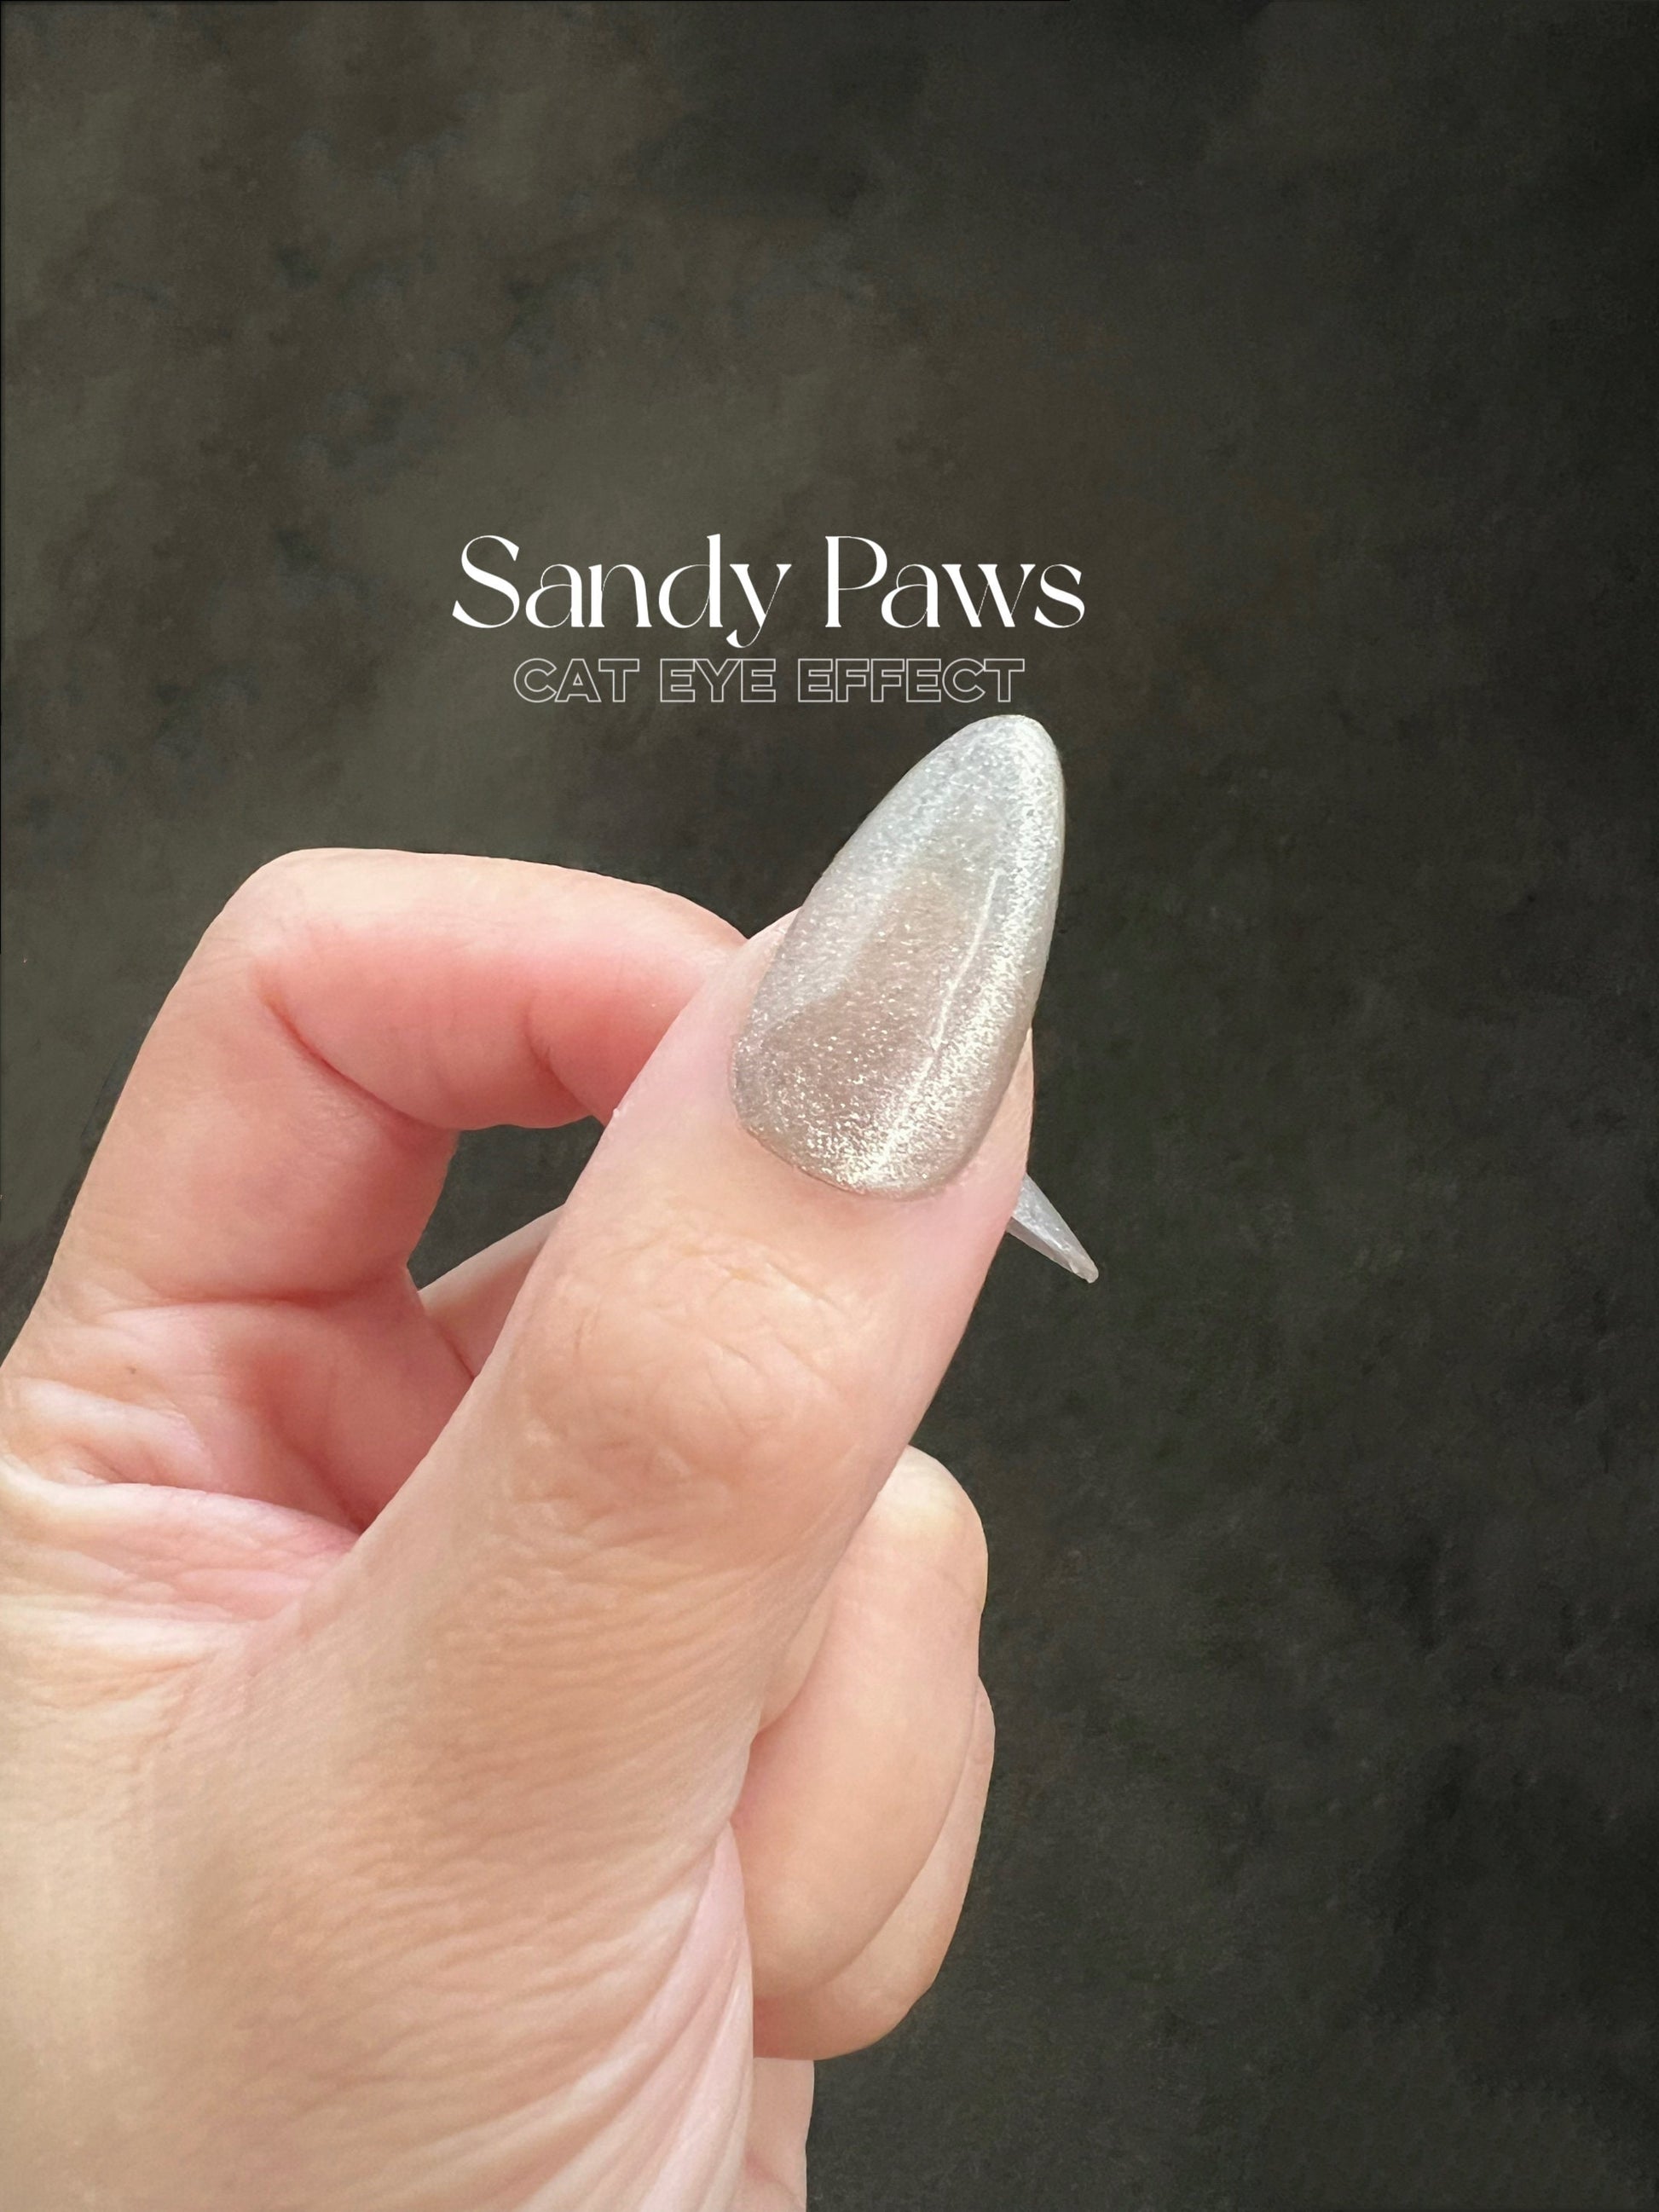 Sandy Paws, Cat Eye Gel Polish, Sheer Beige w/Silver Shimmer